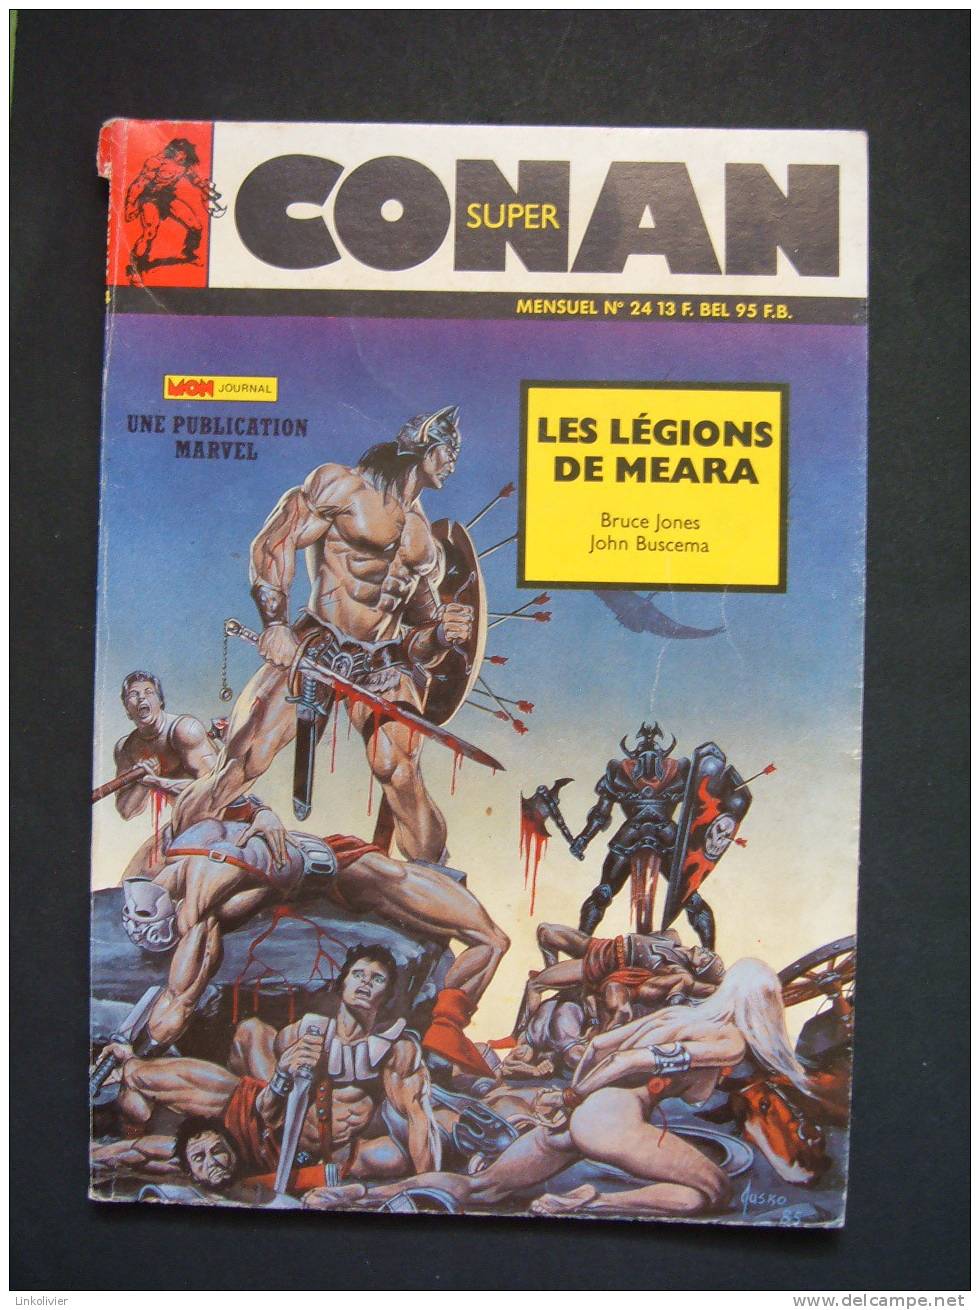 Super CONAN N° 24 - Les Légions De Meara - Ed Mon Journal MARVEL 1987 - Conan